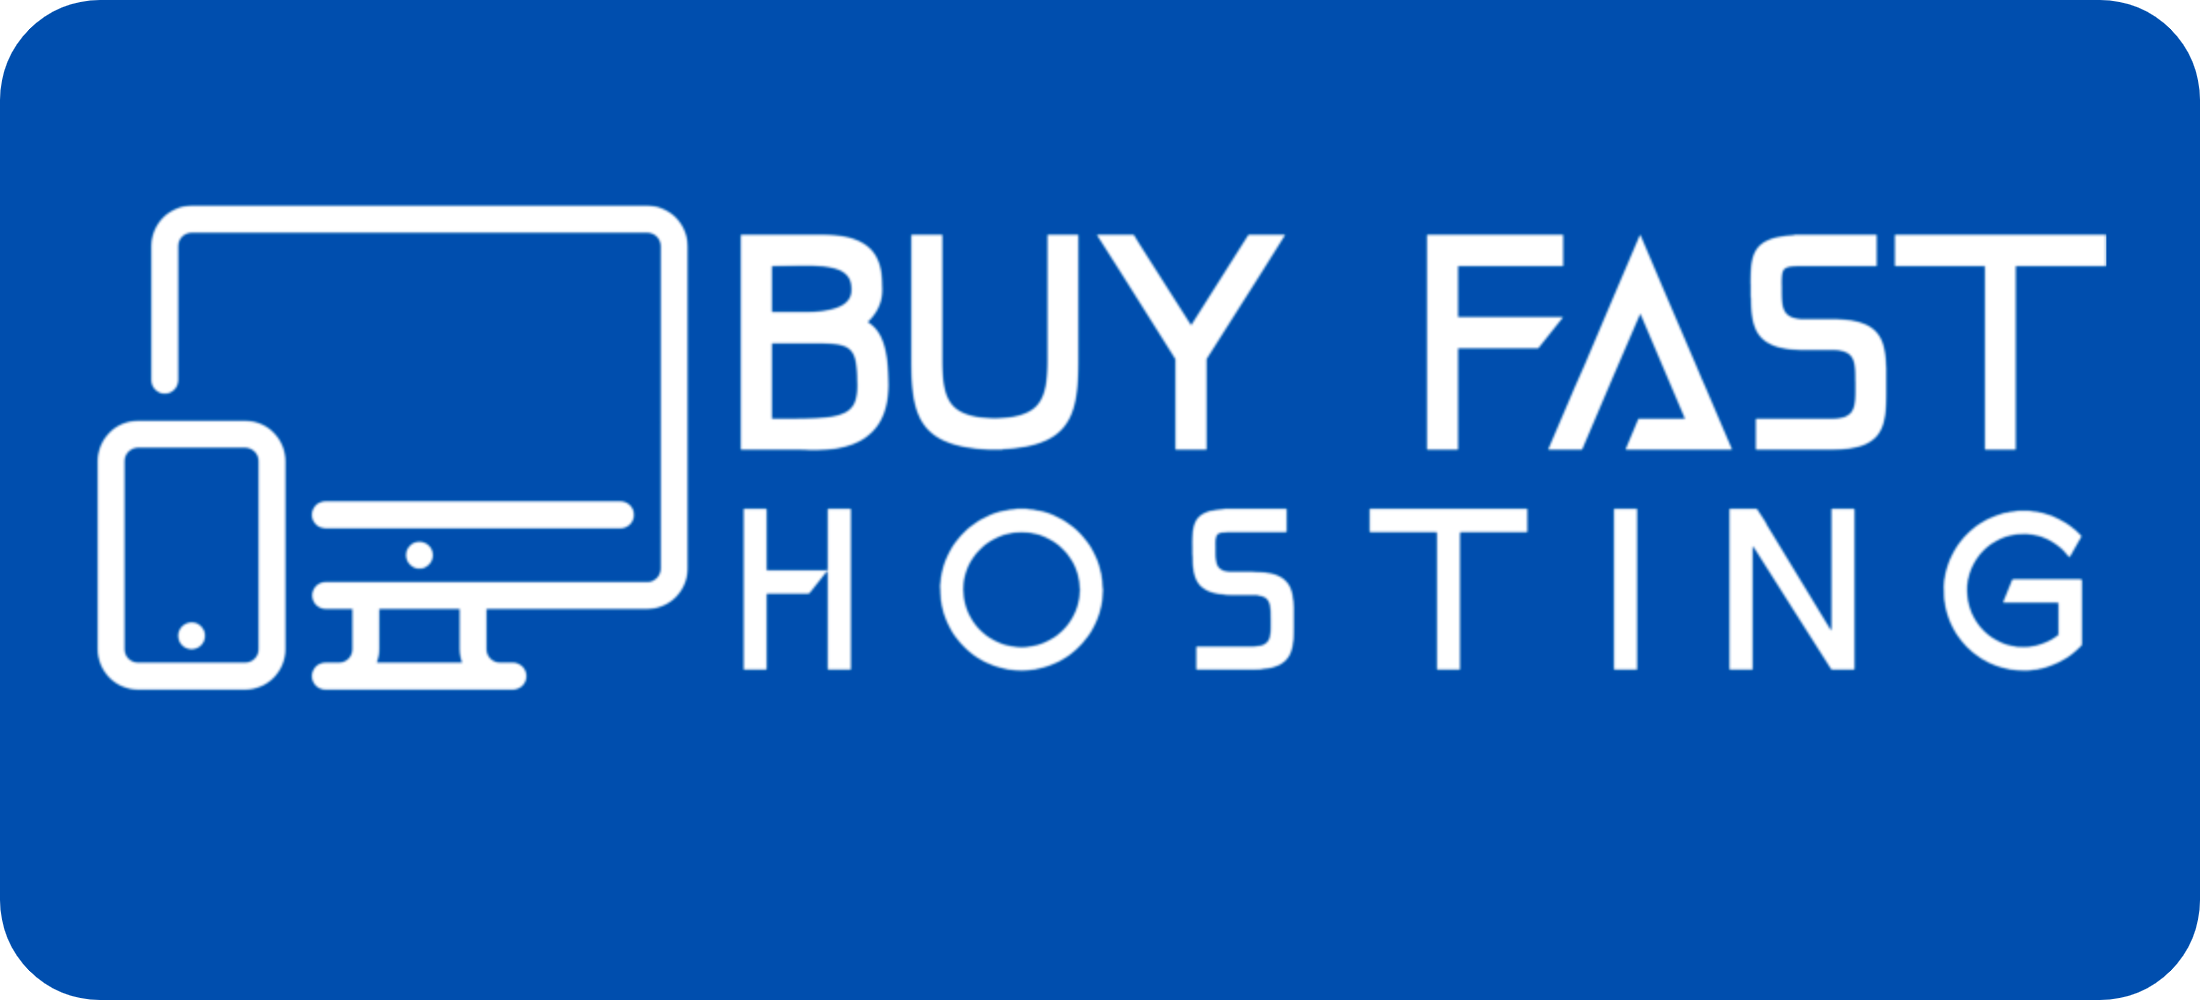 Buy Fast Hosting